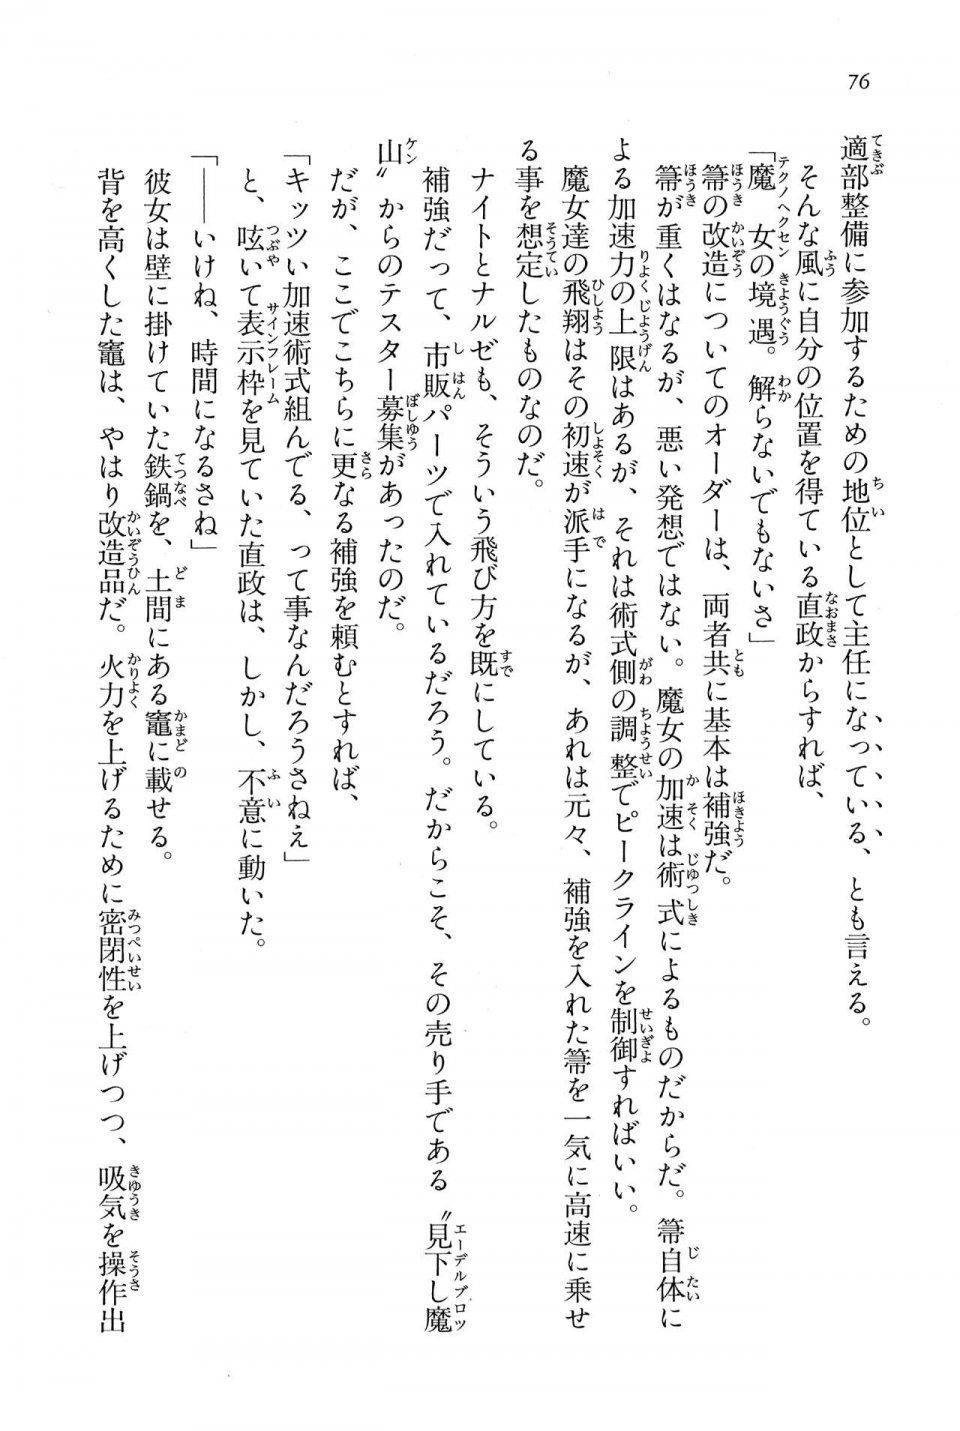 Kyoukai Senjou no Horizon BD Special Mininovel Vol 6(3B) - Photo #80